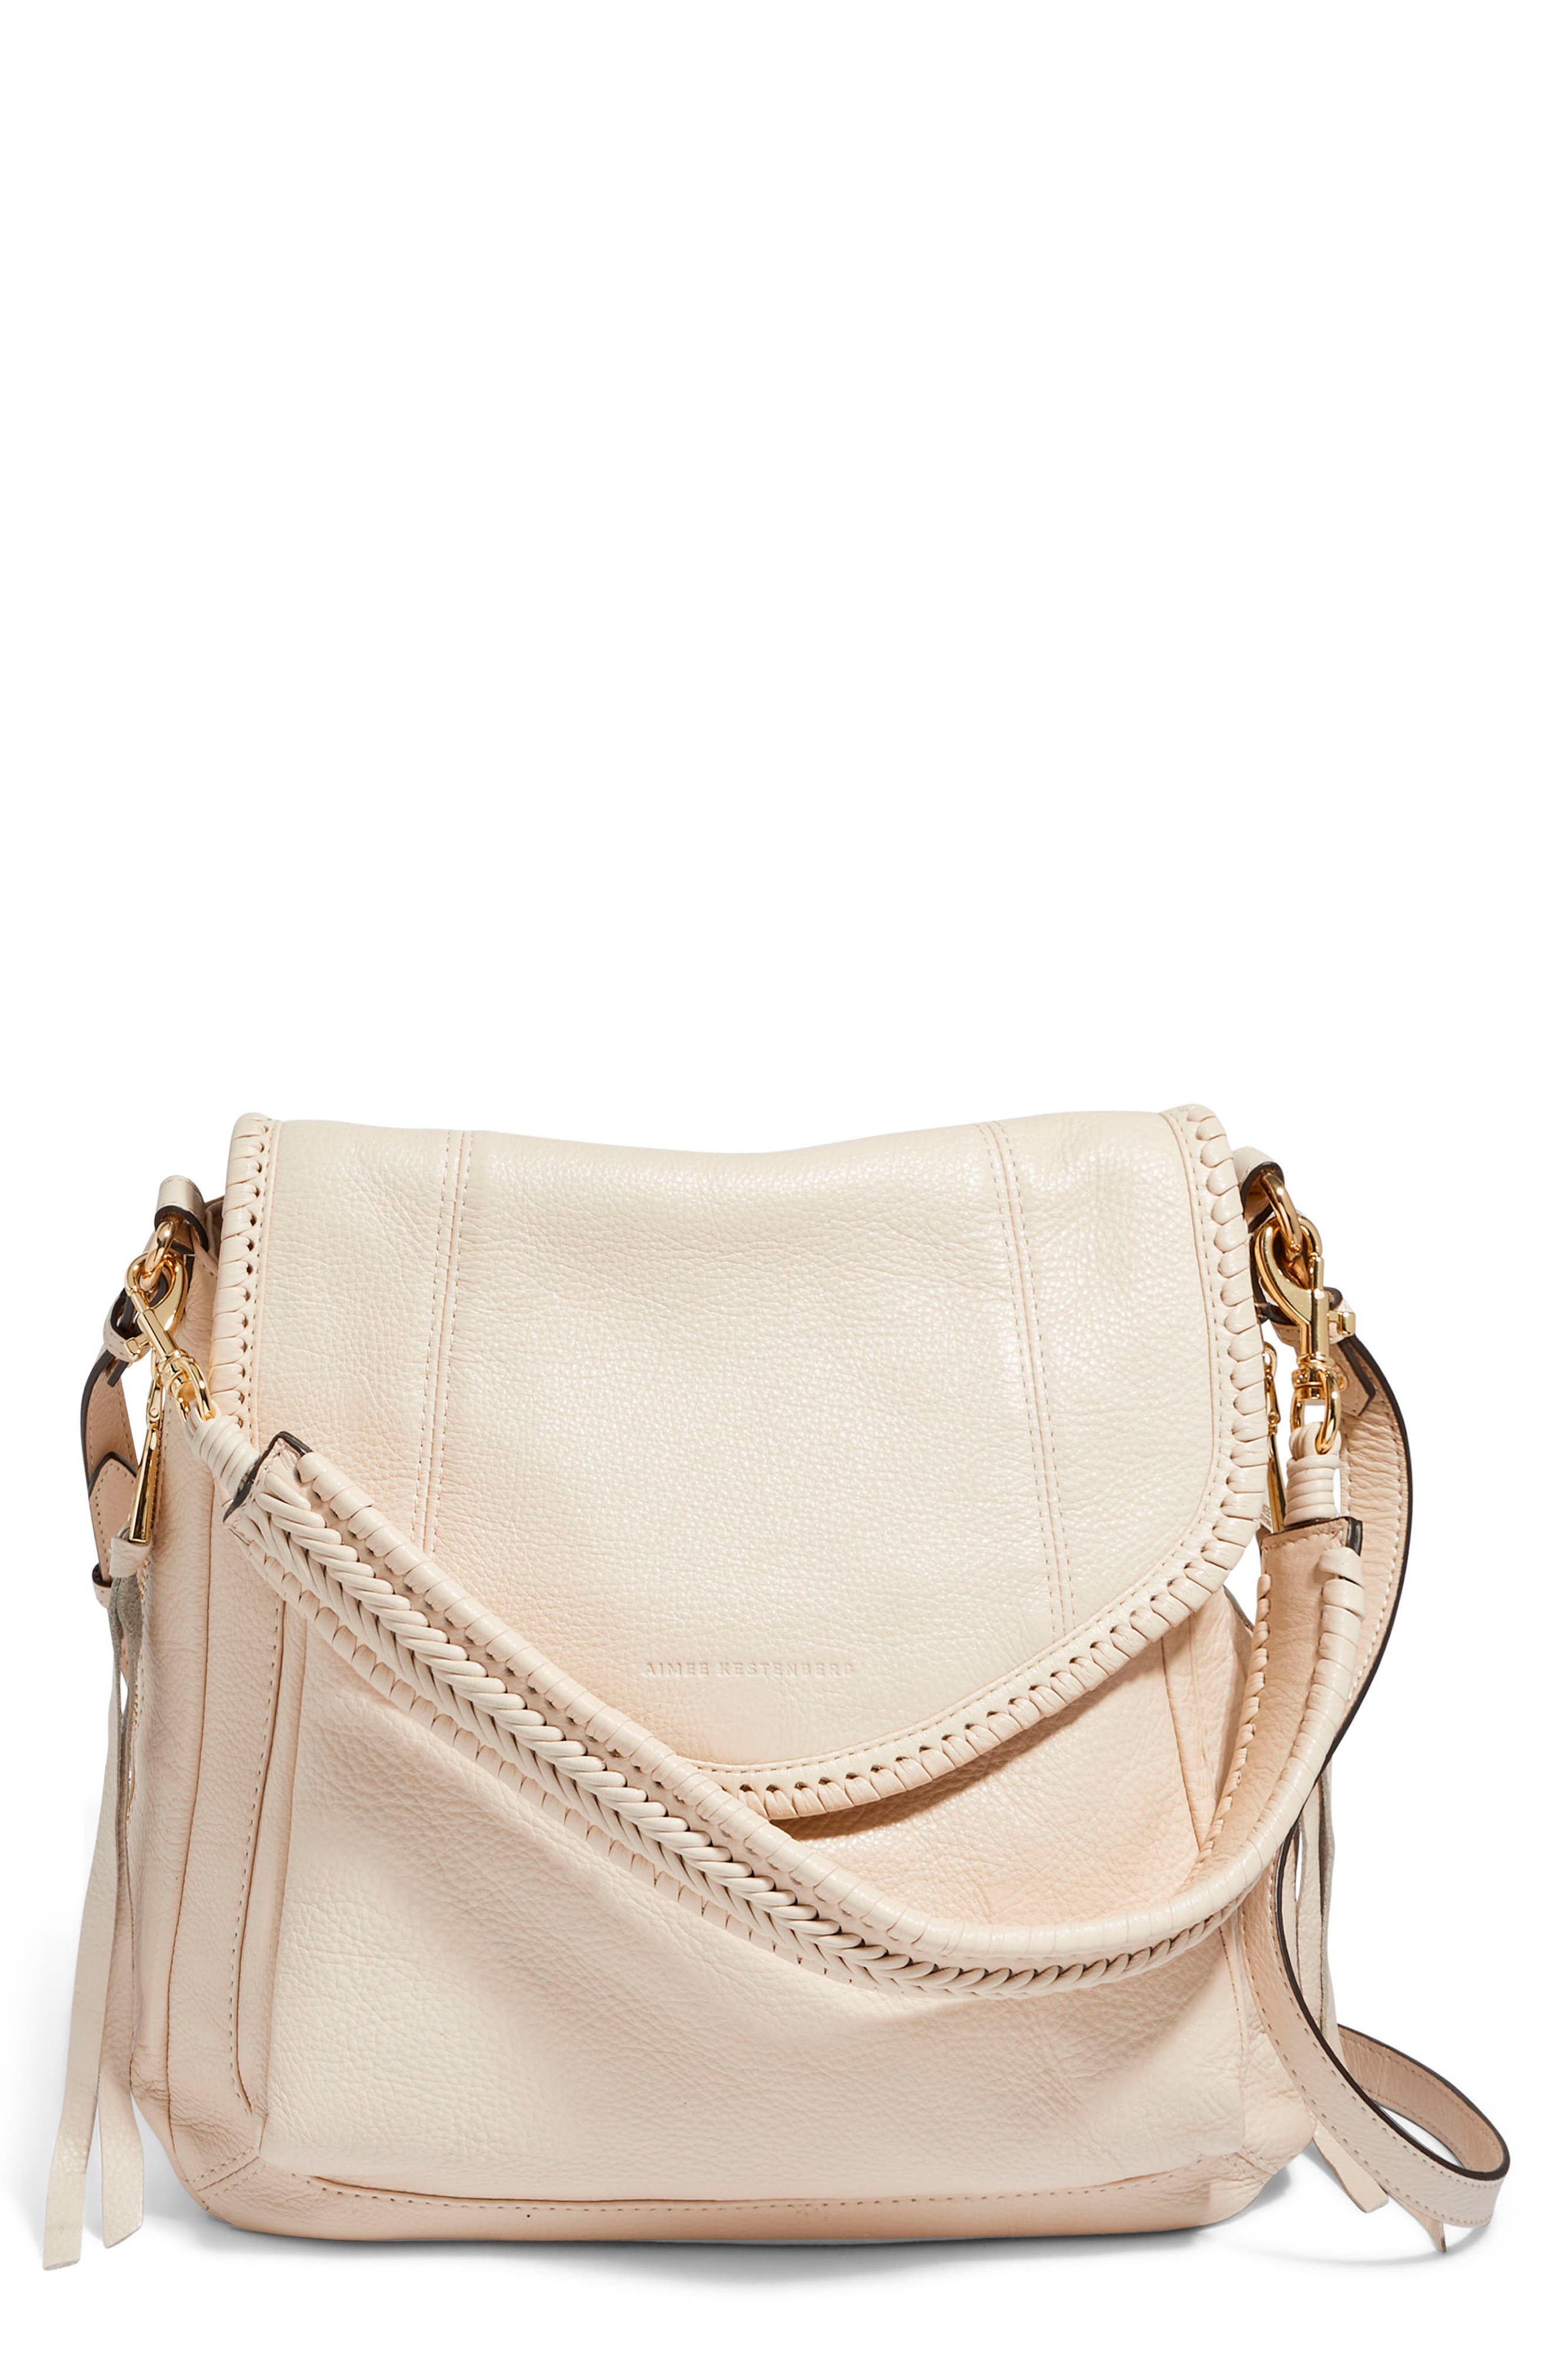 Ladies Cross Body Shoulder Bags White Brown Faux Leather Large Fashion Handbags